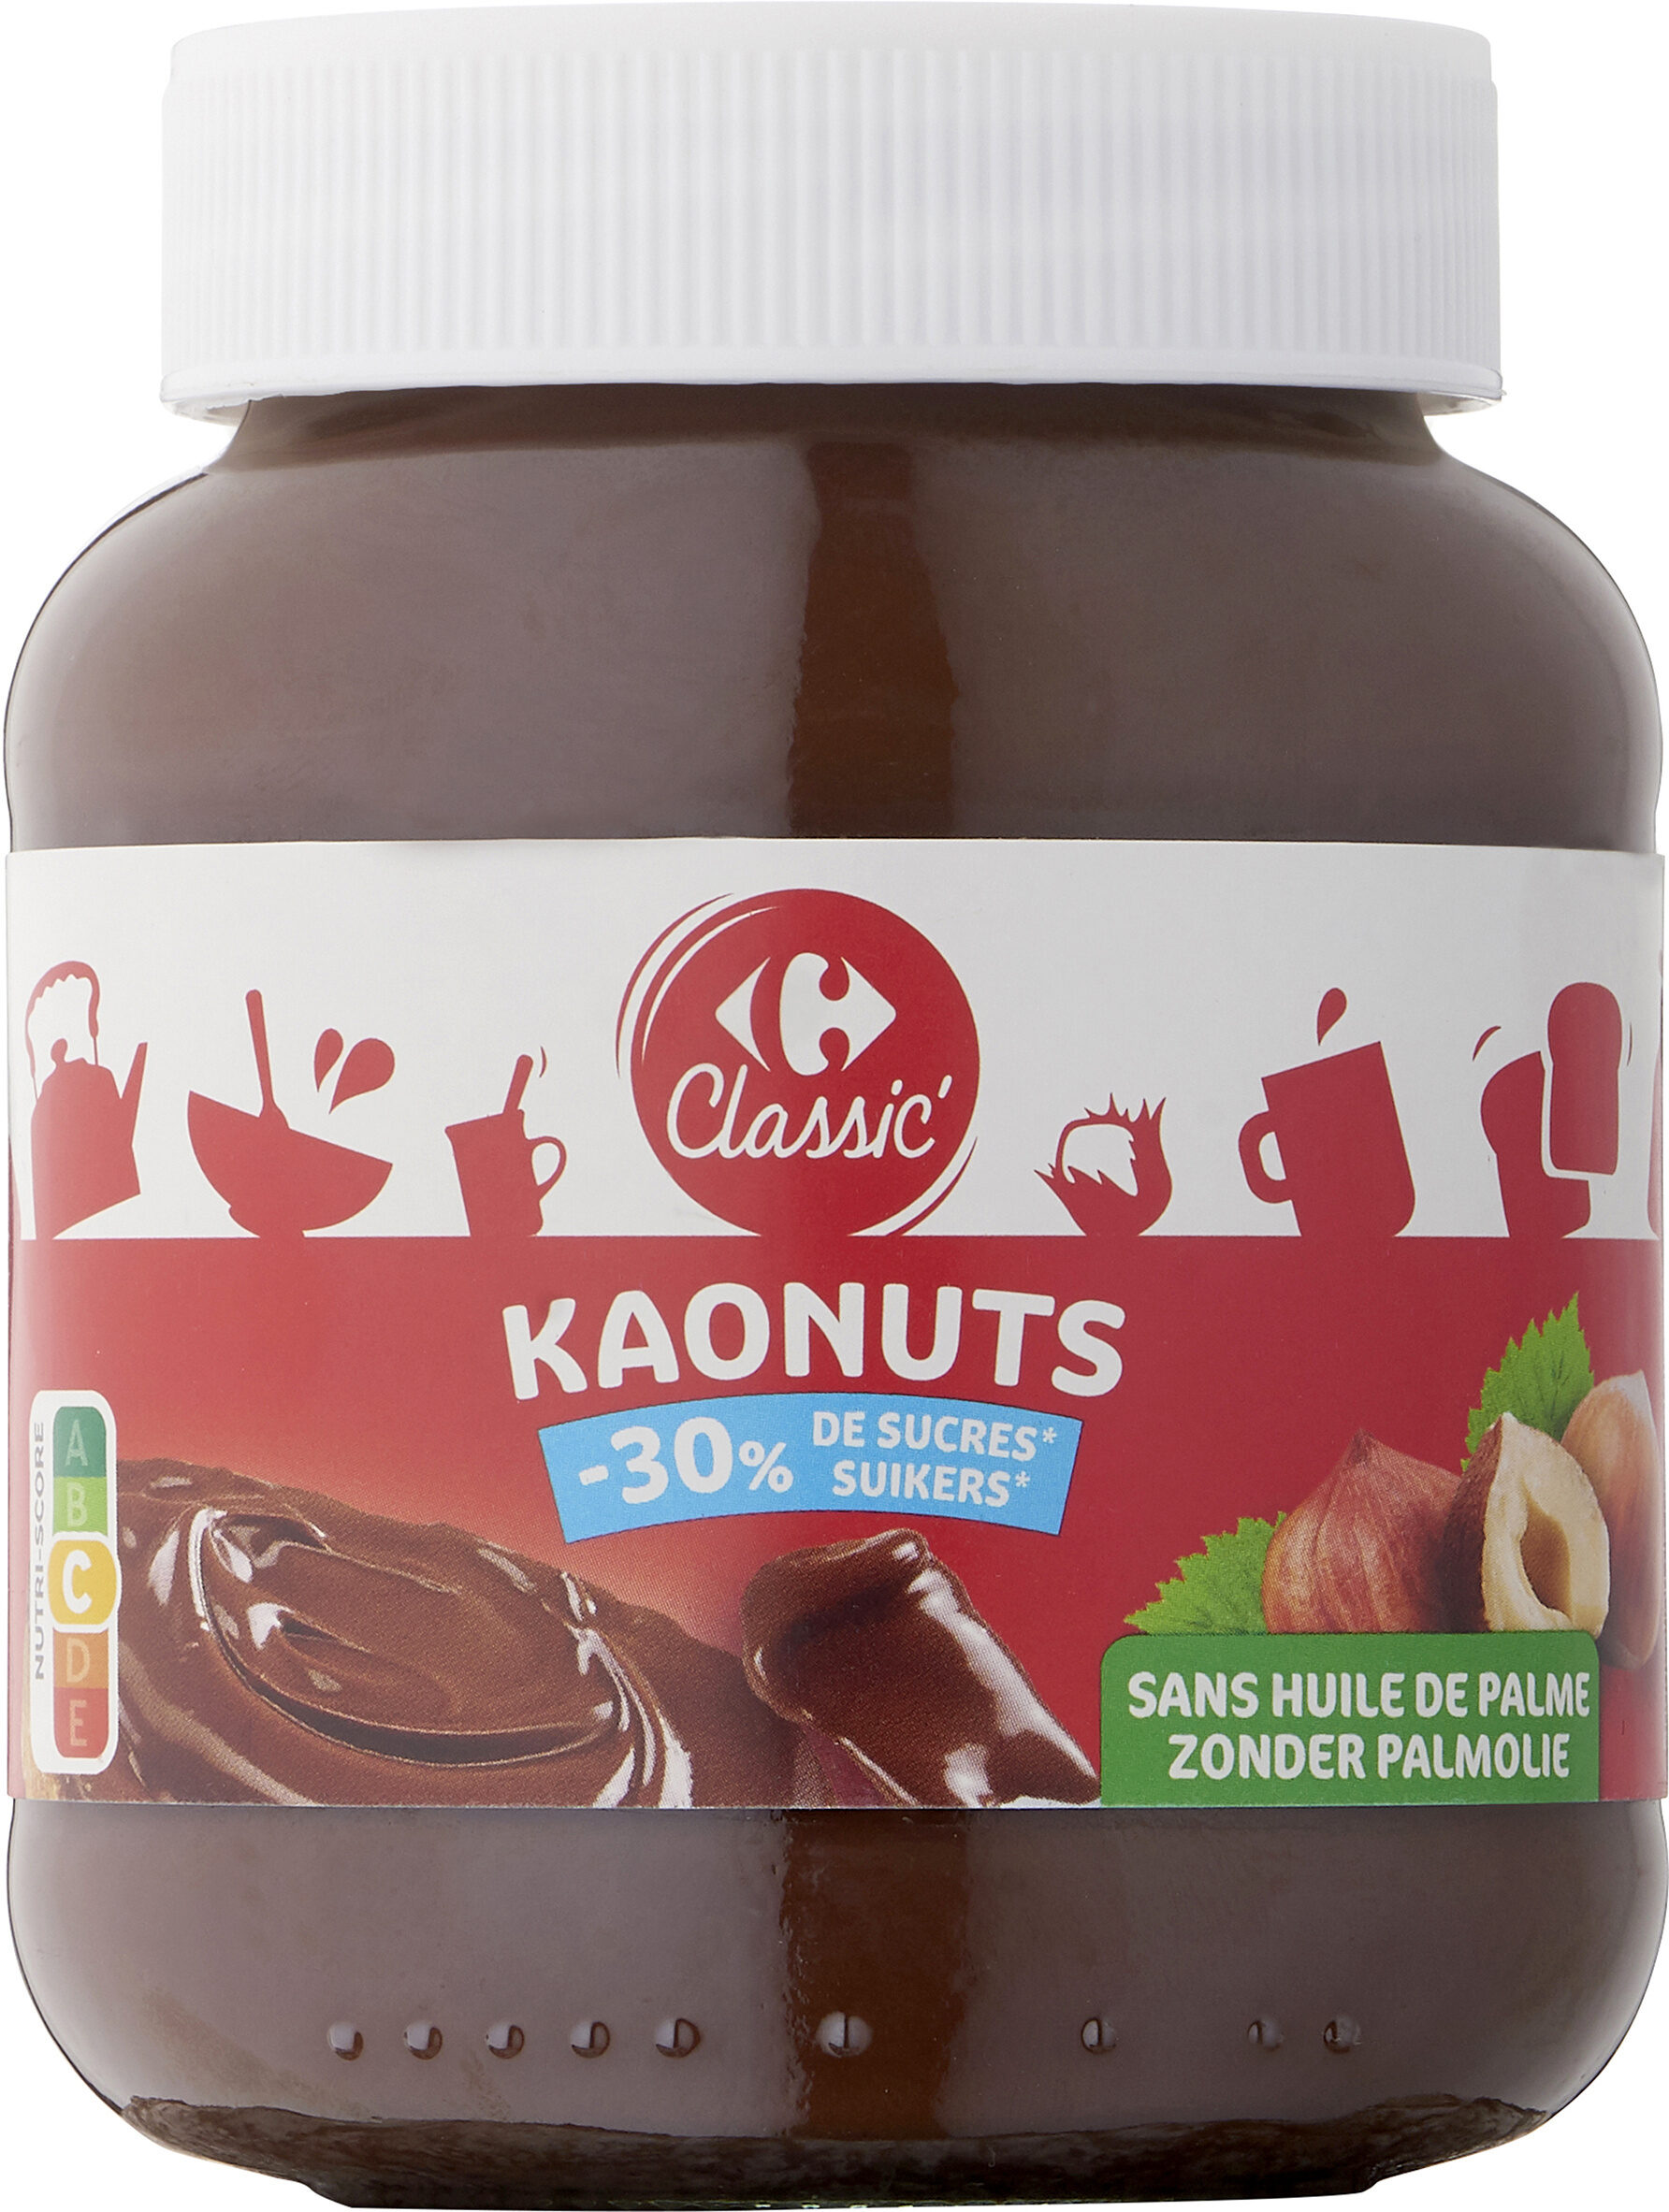 Kaonuts - Product - fr